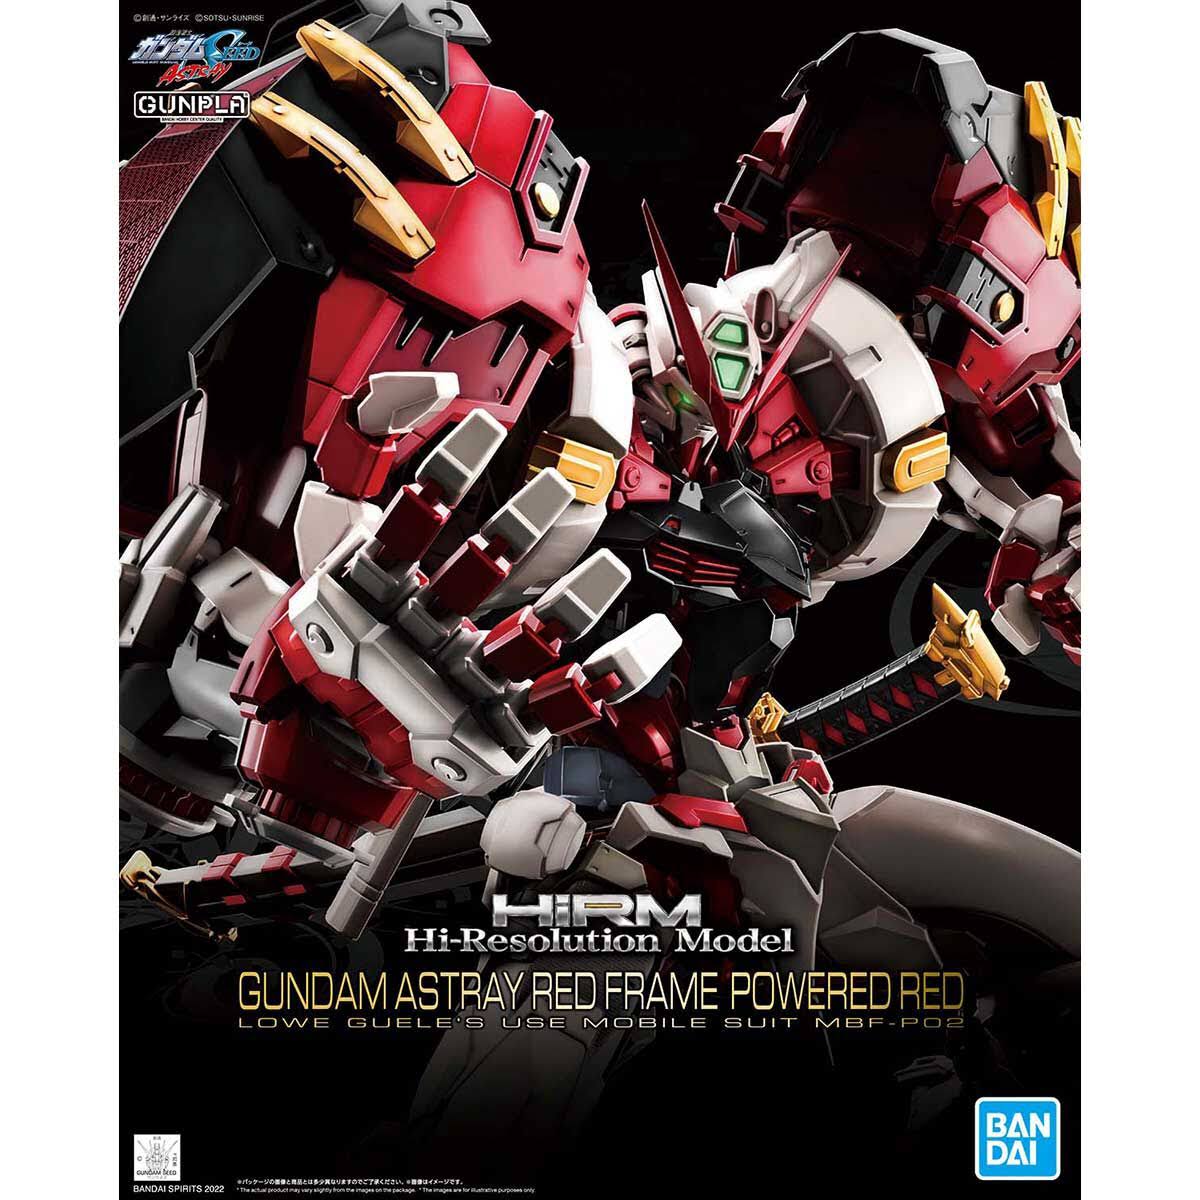 Bandai - Hi-Resolution Model 1/100 Gundam Astray Red Frame Powered Red Plastic Model